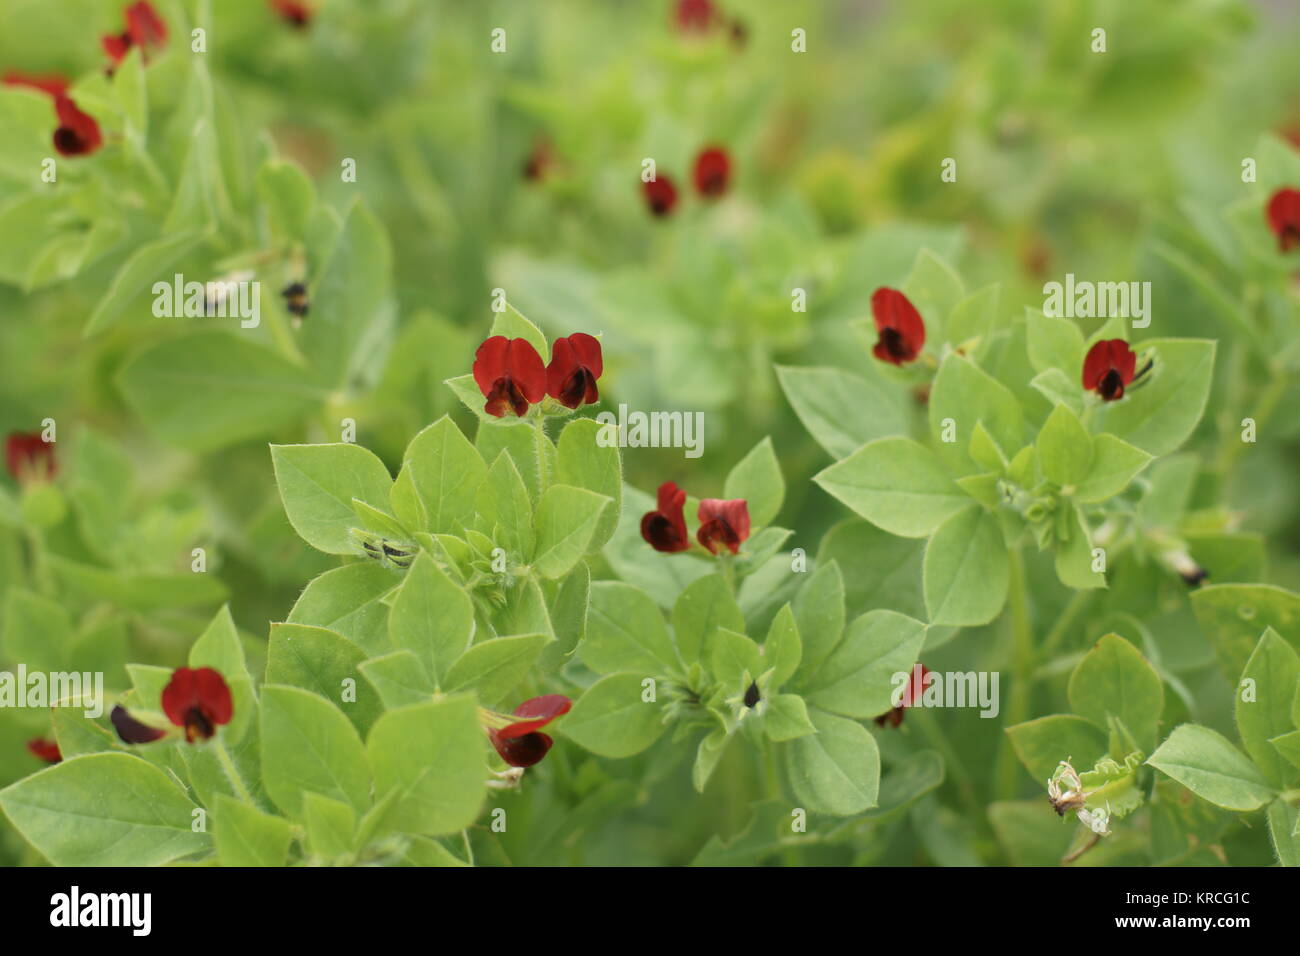 Asparagus Pea (Lotus tetragonolobus) Stock Photo